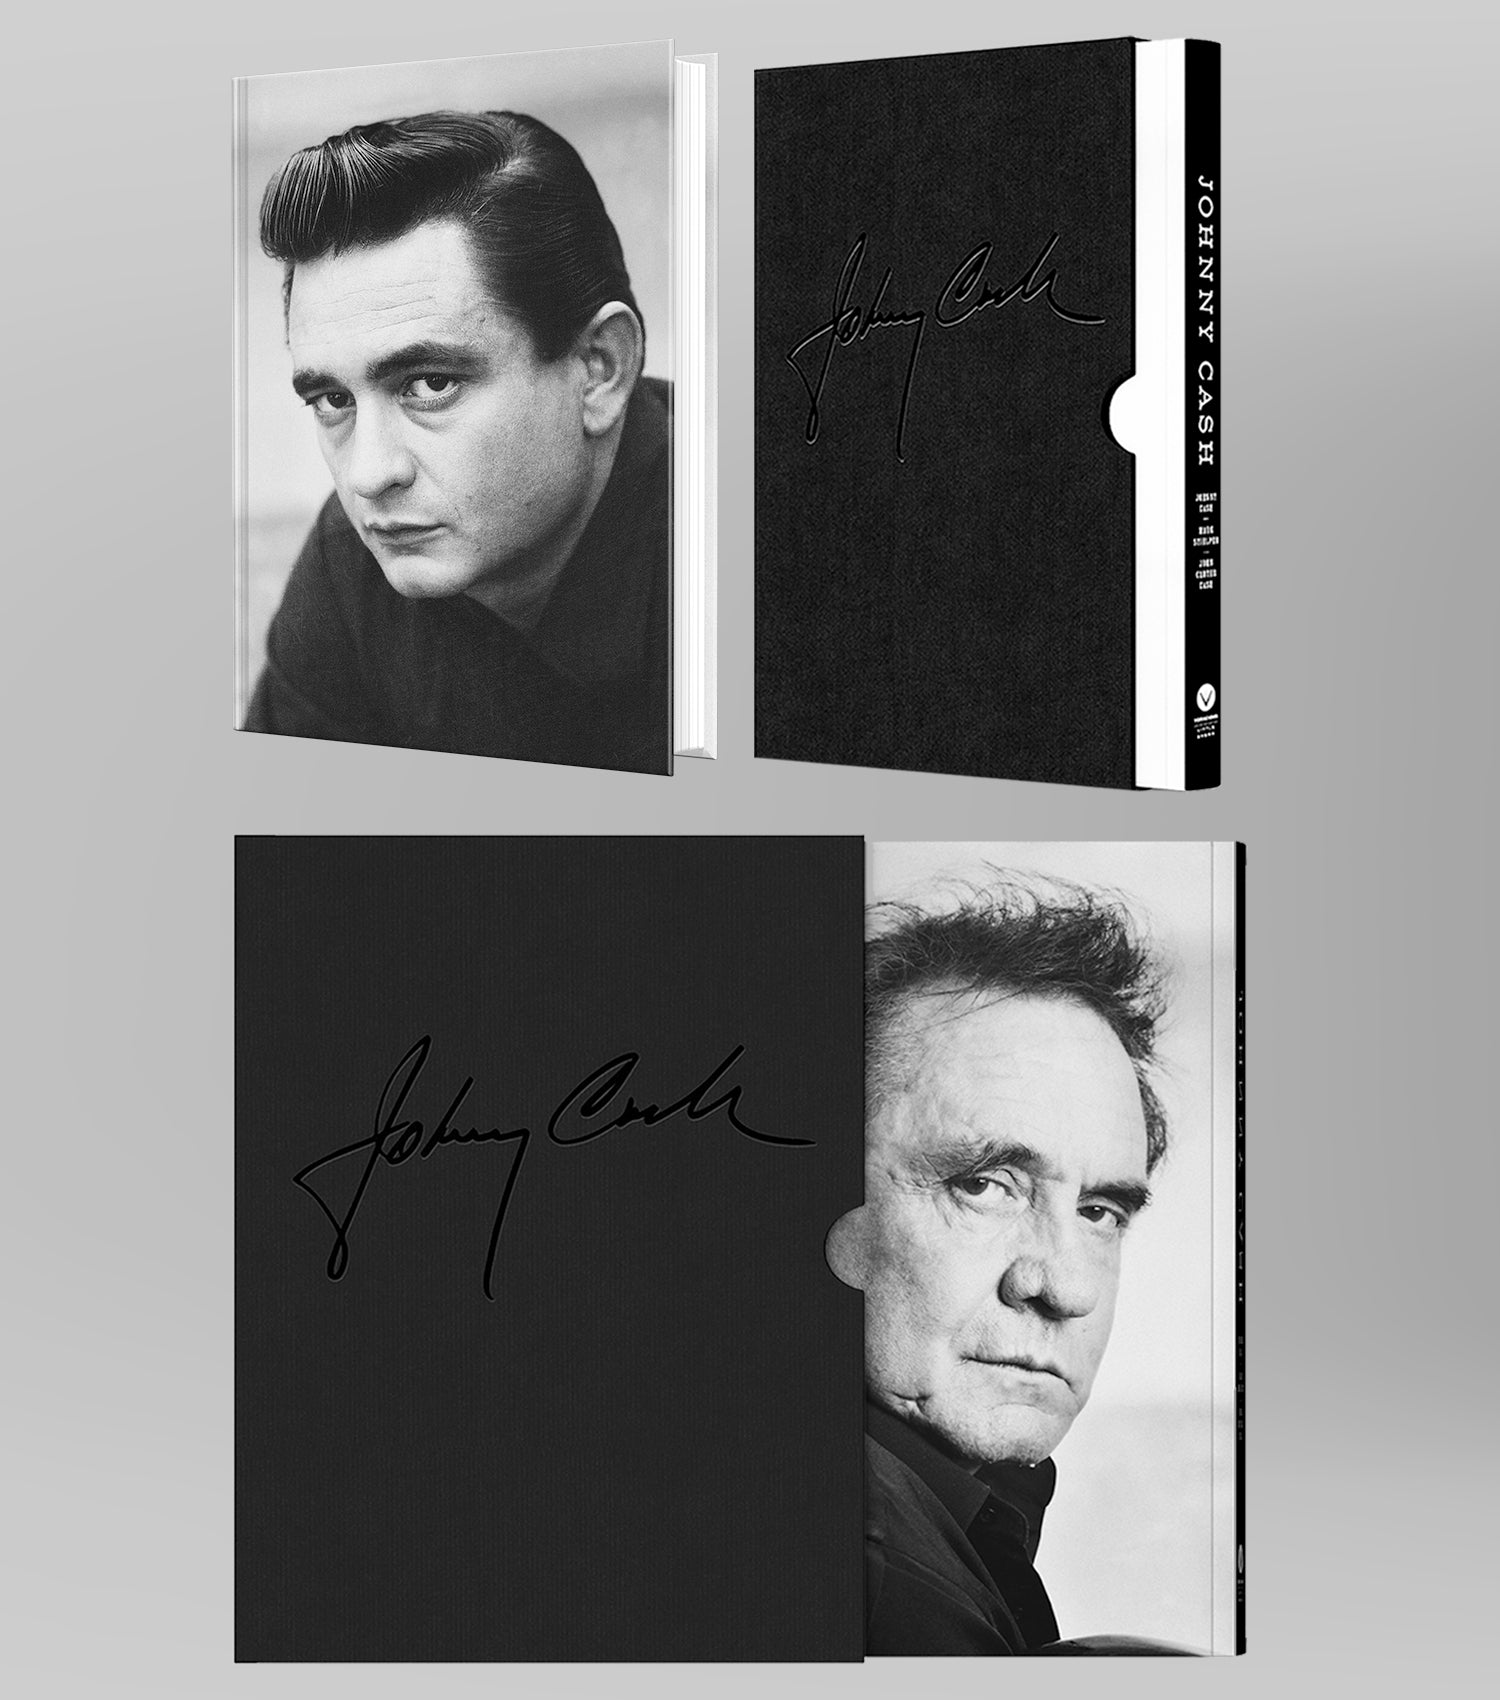 Johnny Cash: The Life in Lyrics by Mark Stielper, Johnny Carter Cash, Johnny Cash